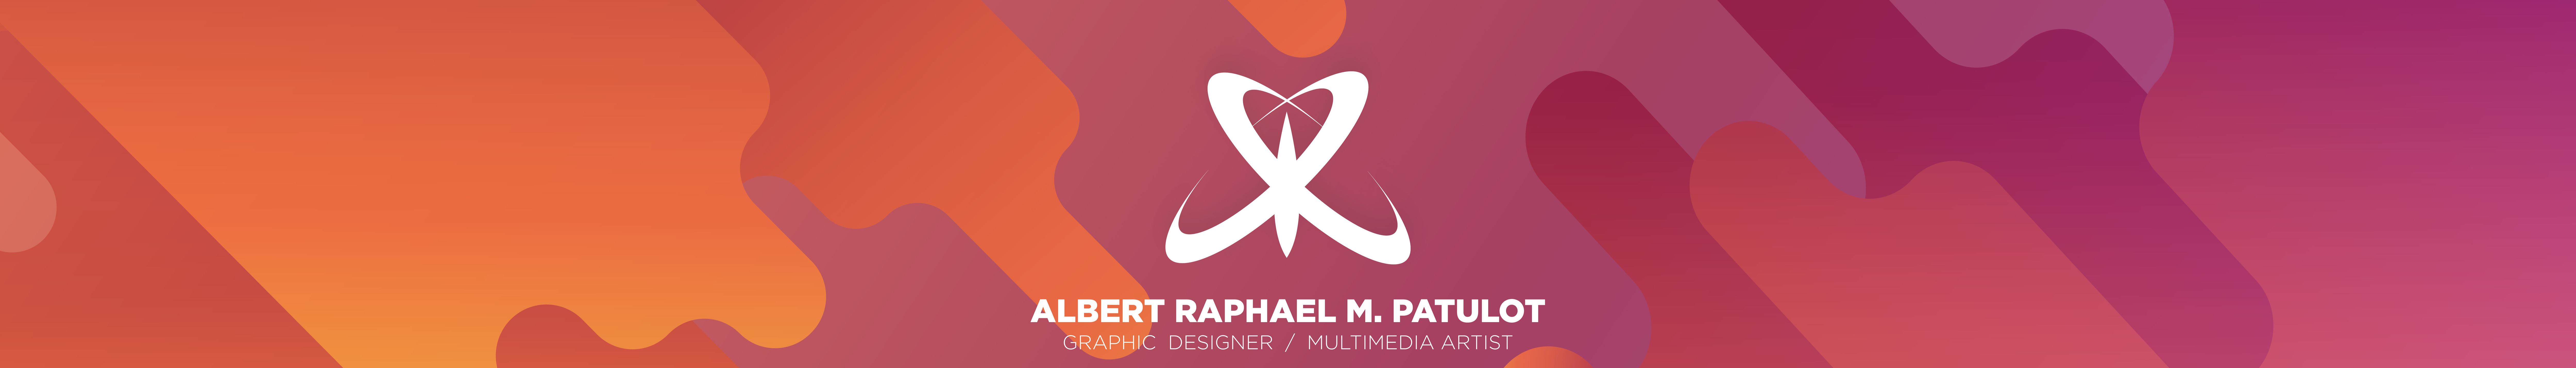 Albert Raphael Patulot's profile banner